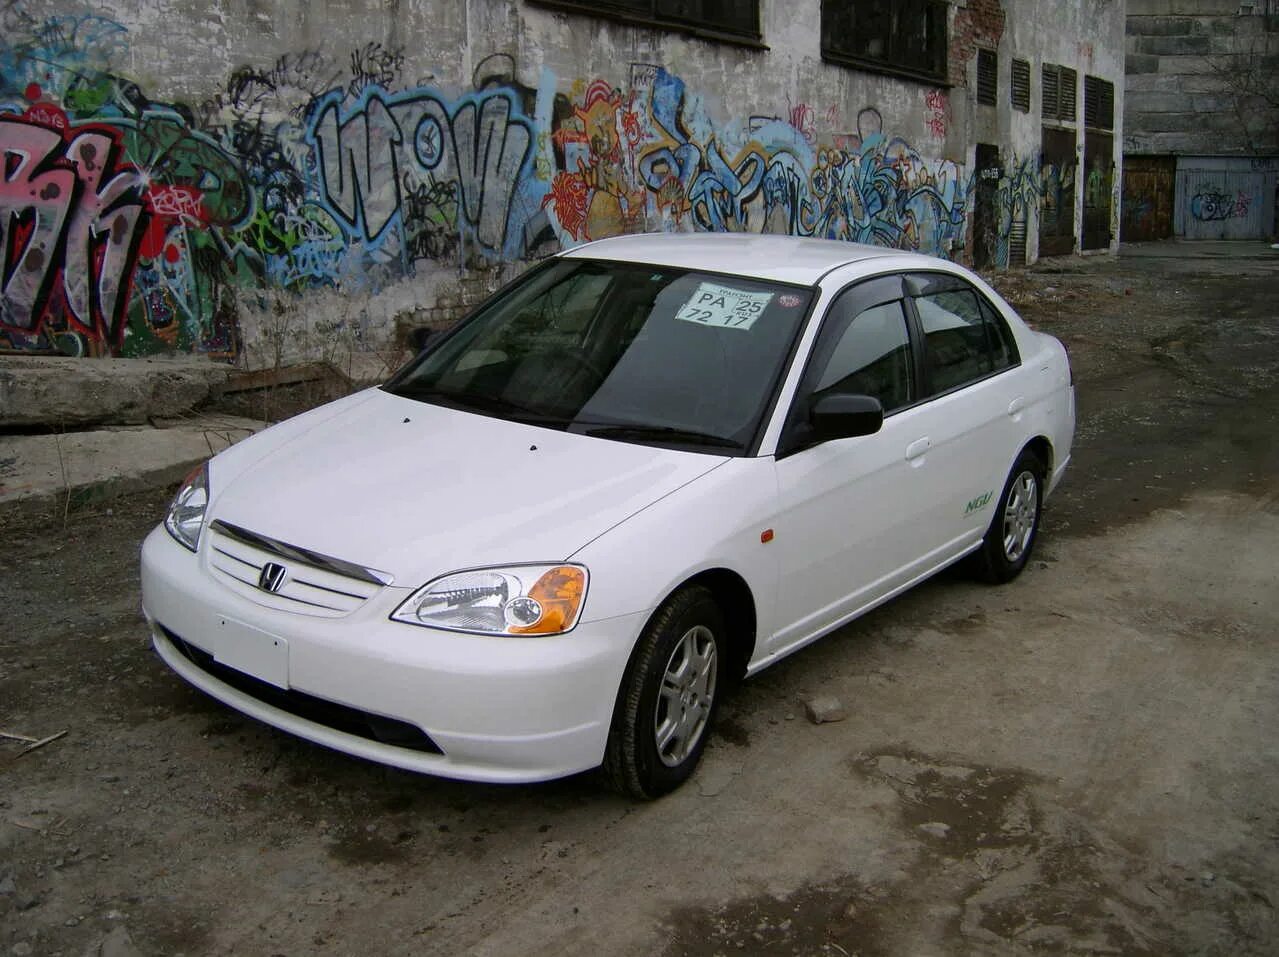 Купить хонда цивик ферио красноярске. Honda Civic Ferio. Honda Civic Ferio 2002. Хонда Цивик Ферио 2000. Honda Civic(Ferio) 7 2002.